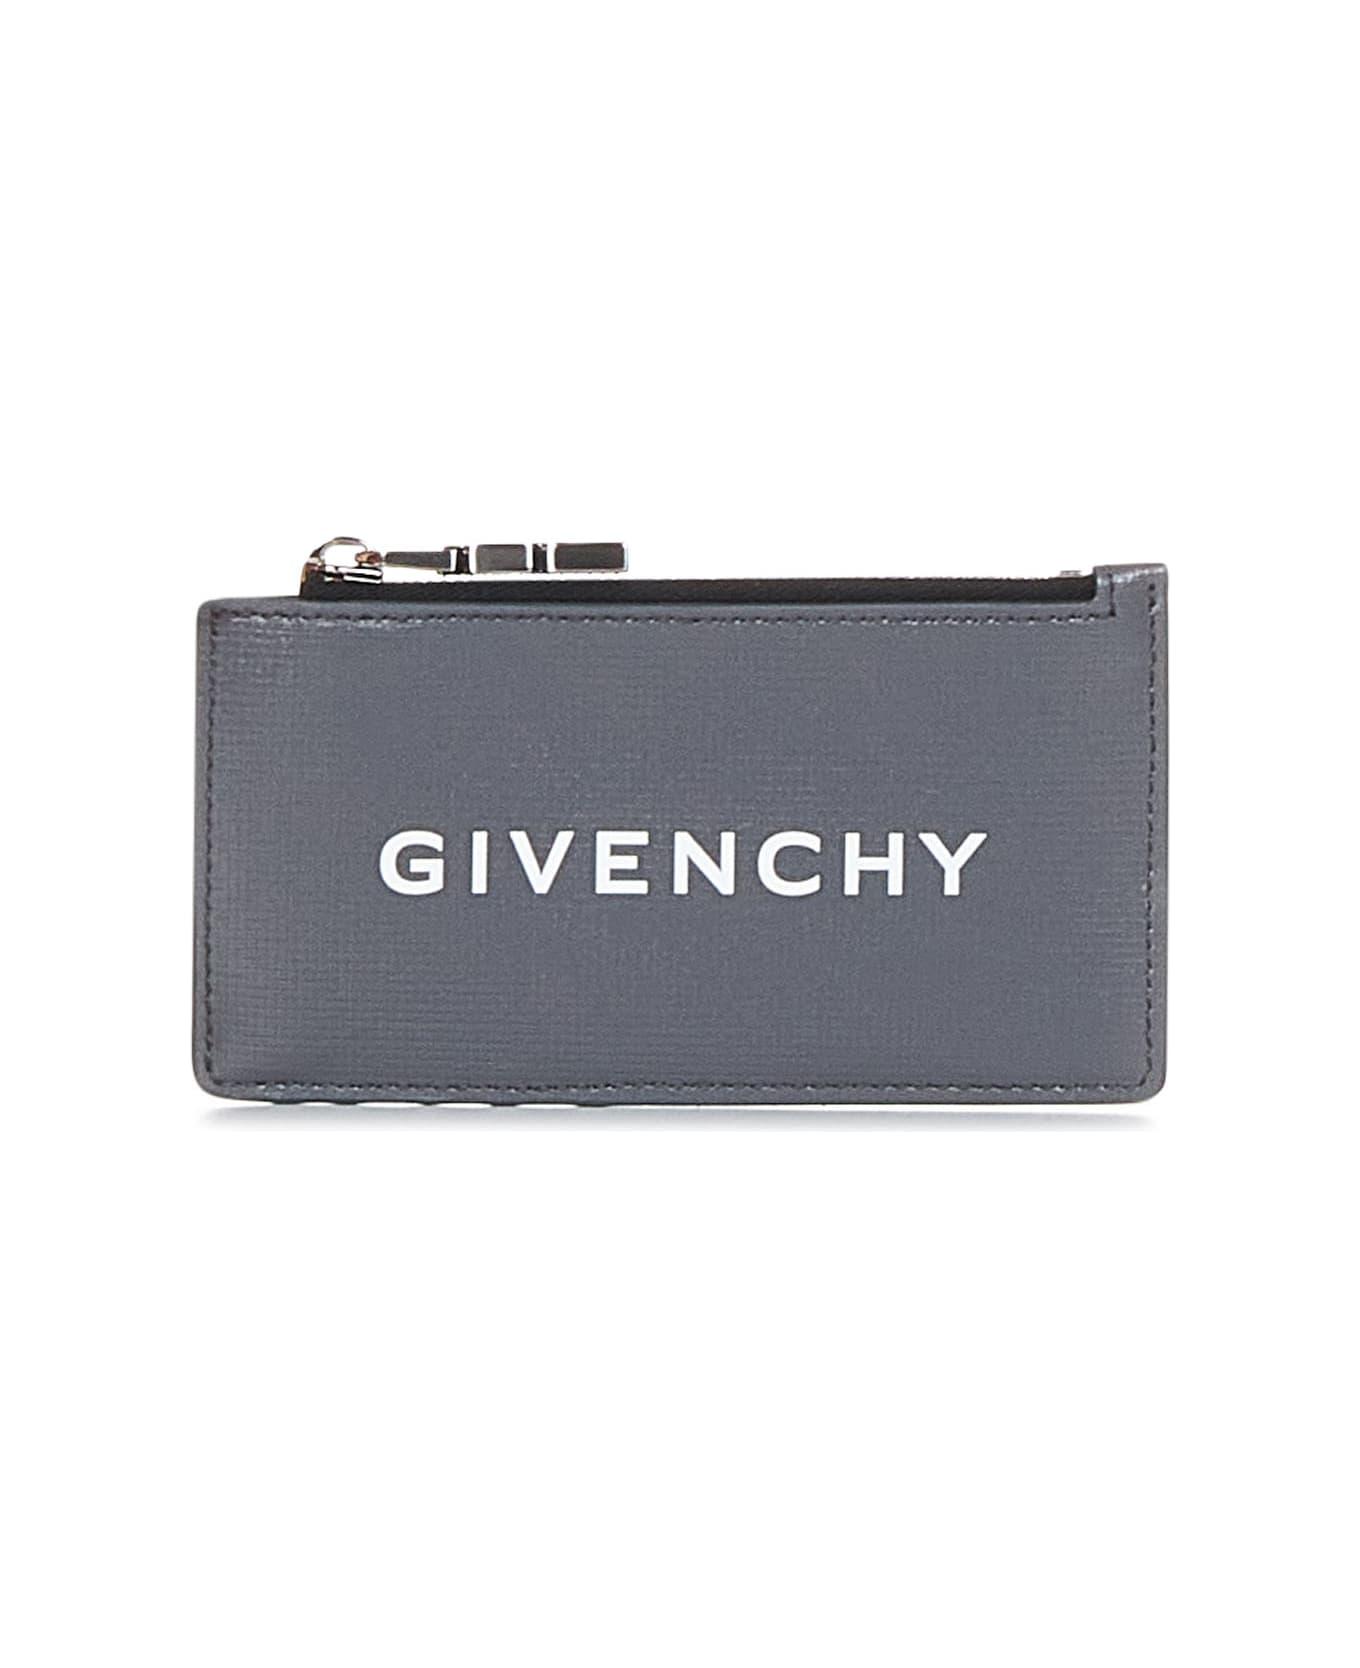 Givenchy Cardholder - Grey